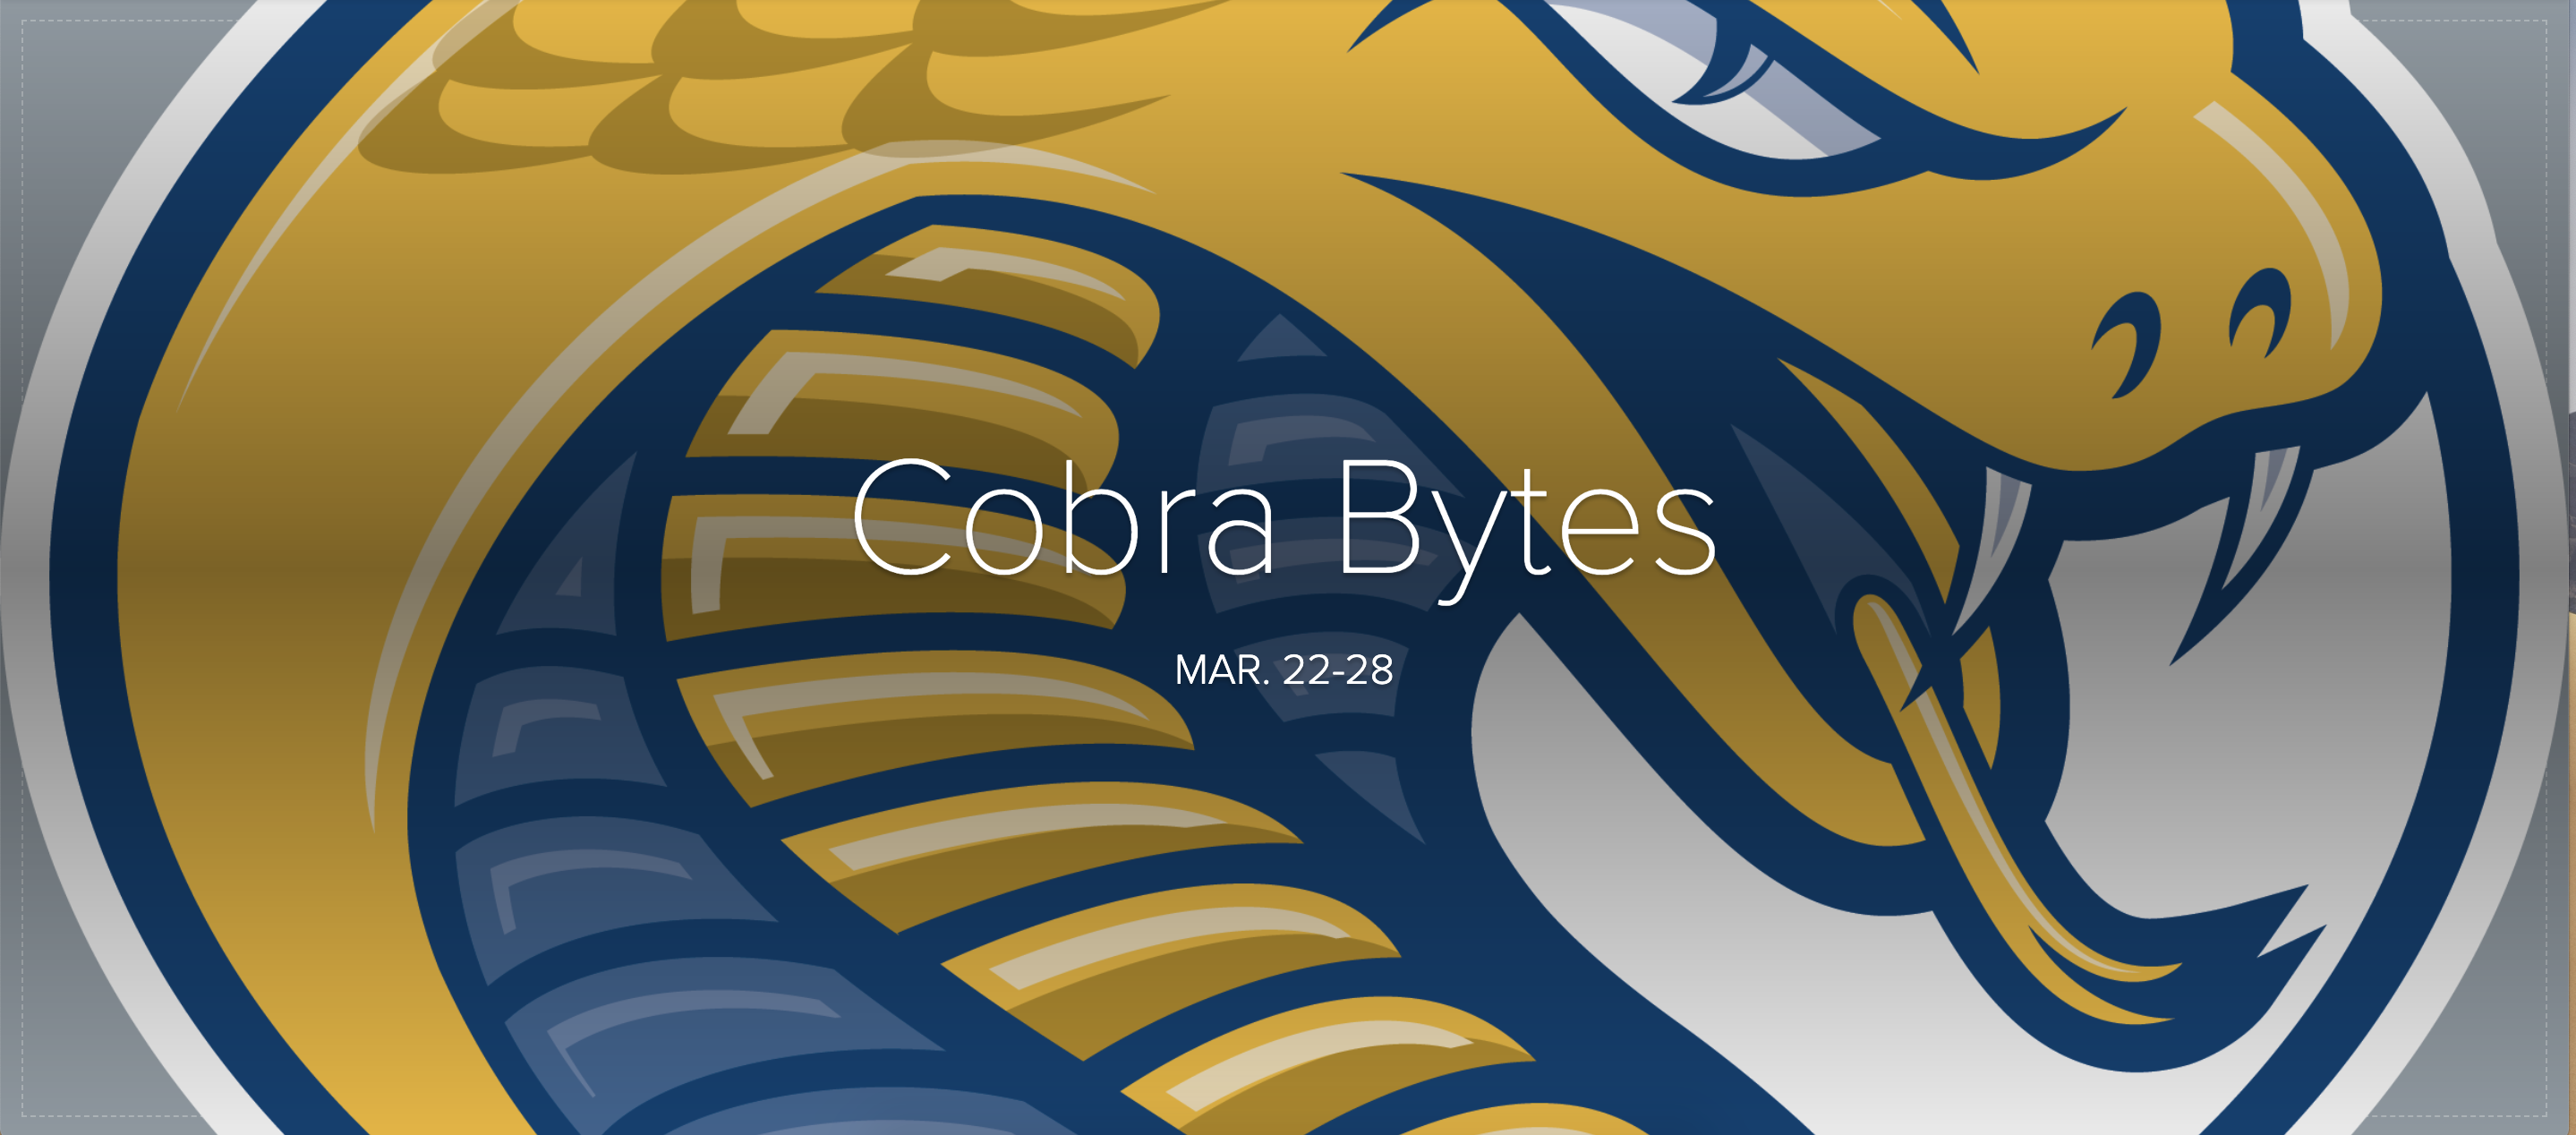 Cobra Bytes Mar. 22-28